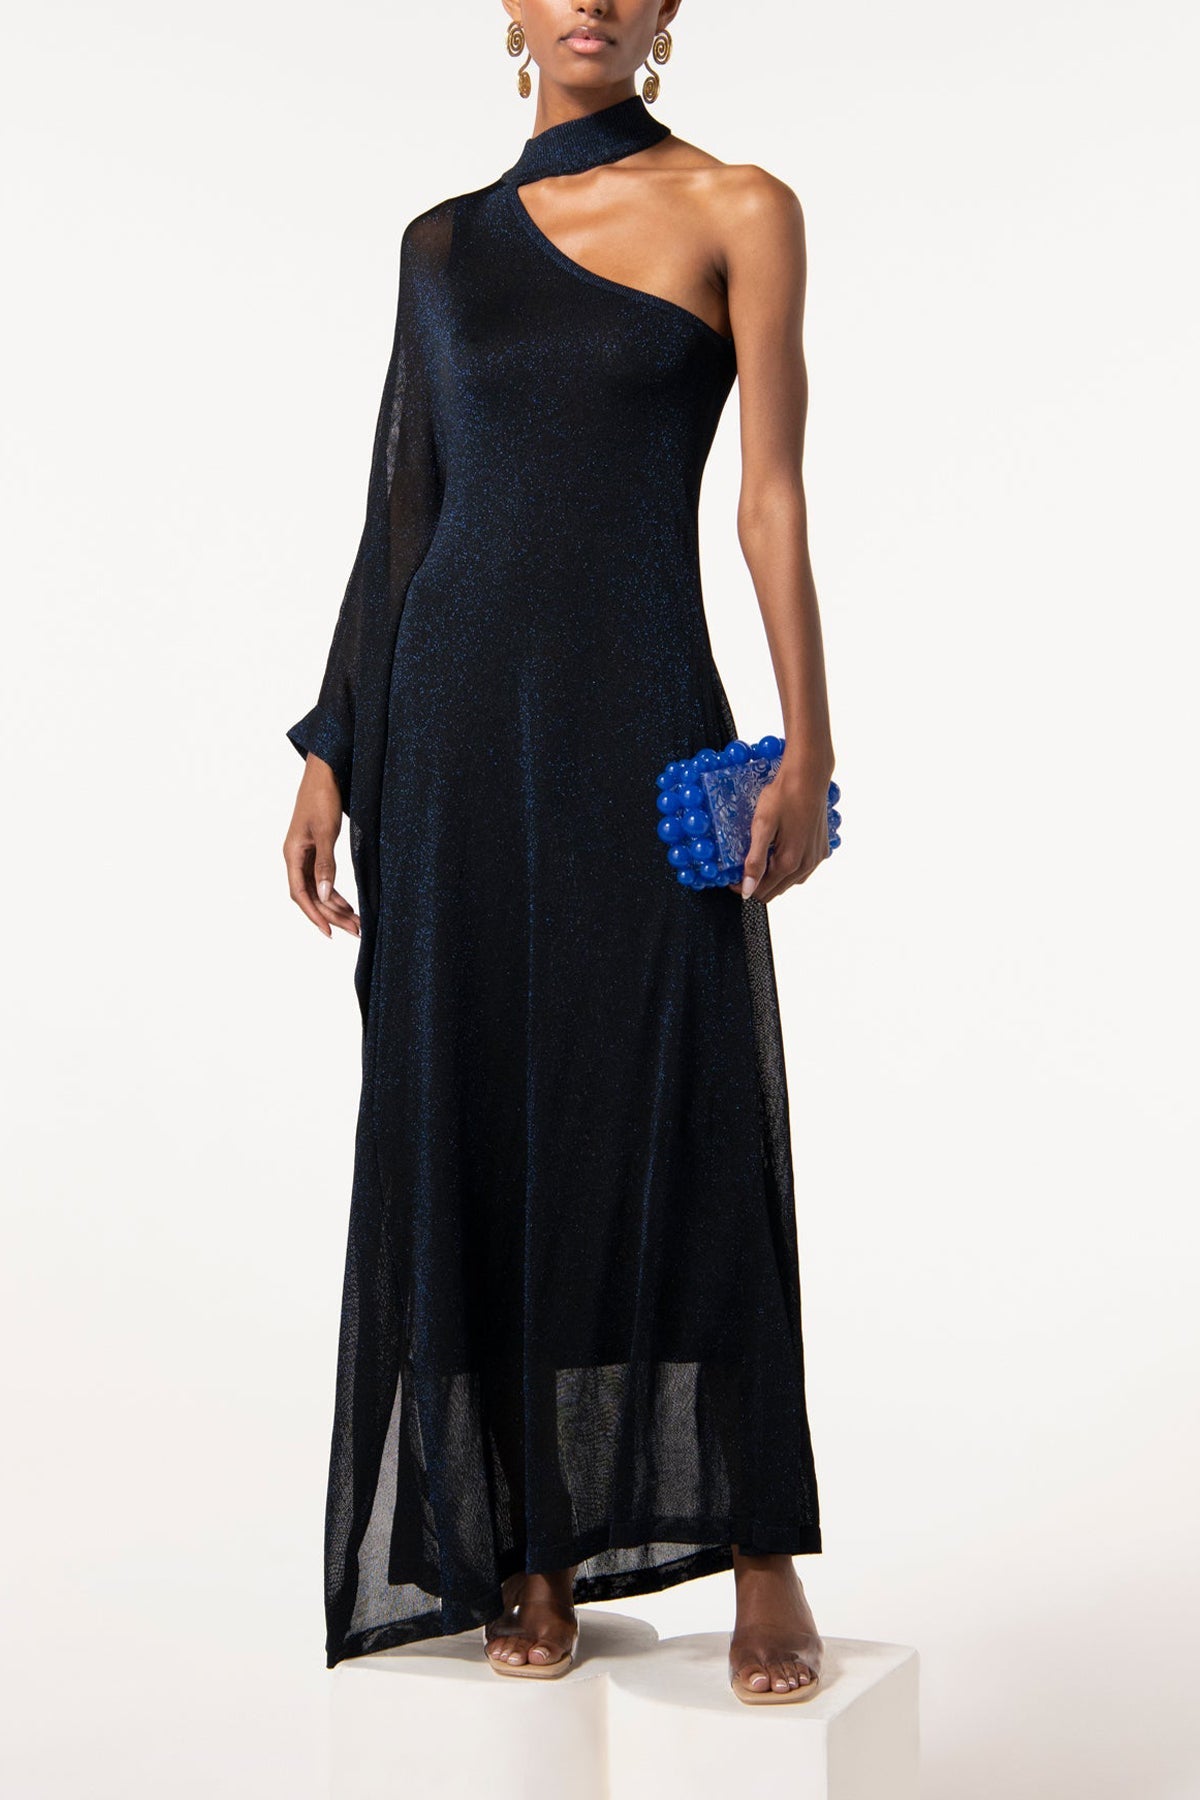 Nami Knit Dress in Midnight Black - shop-olivia.com